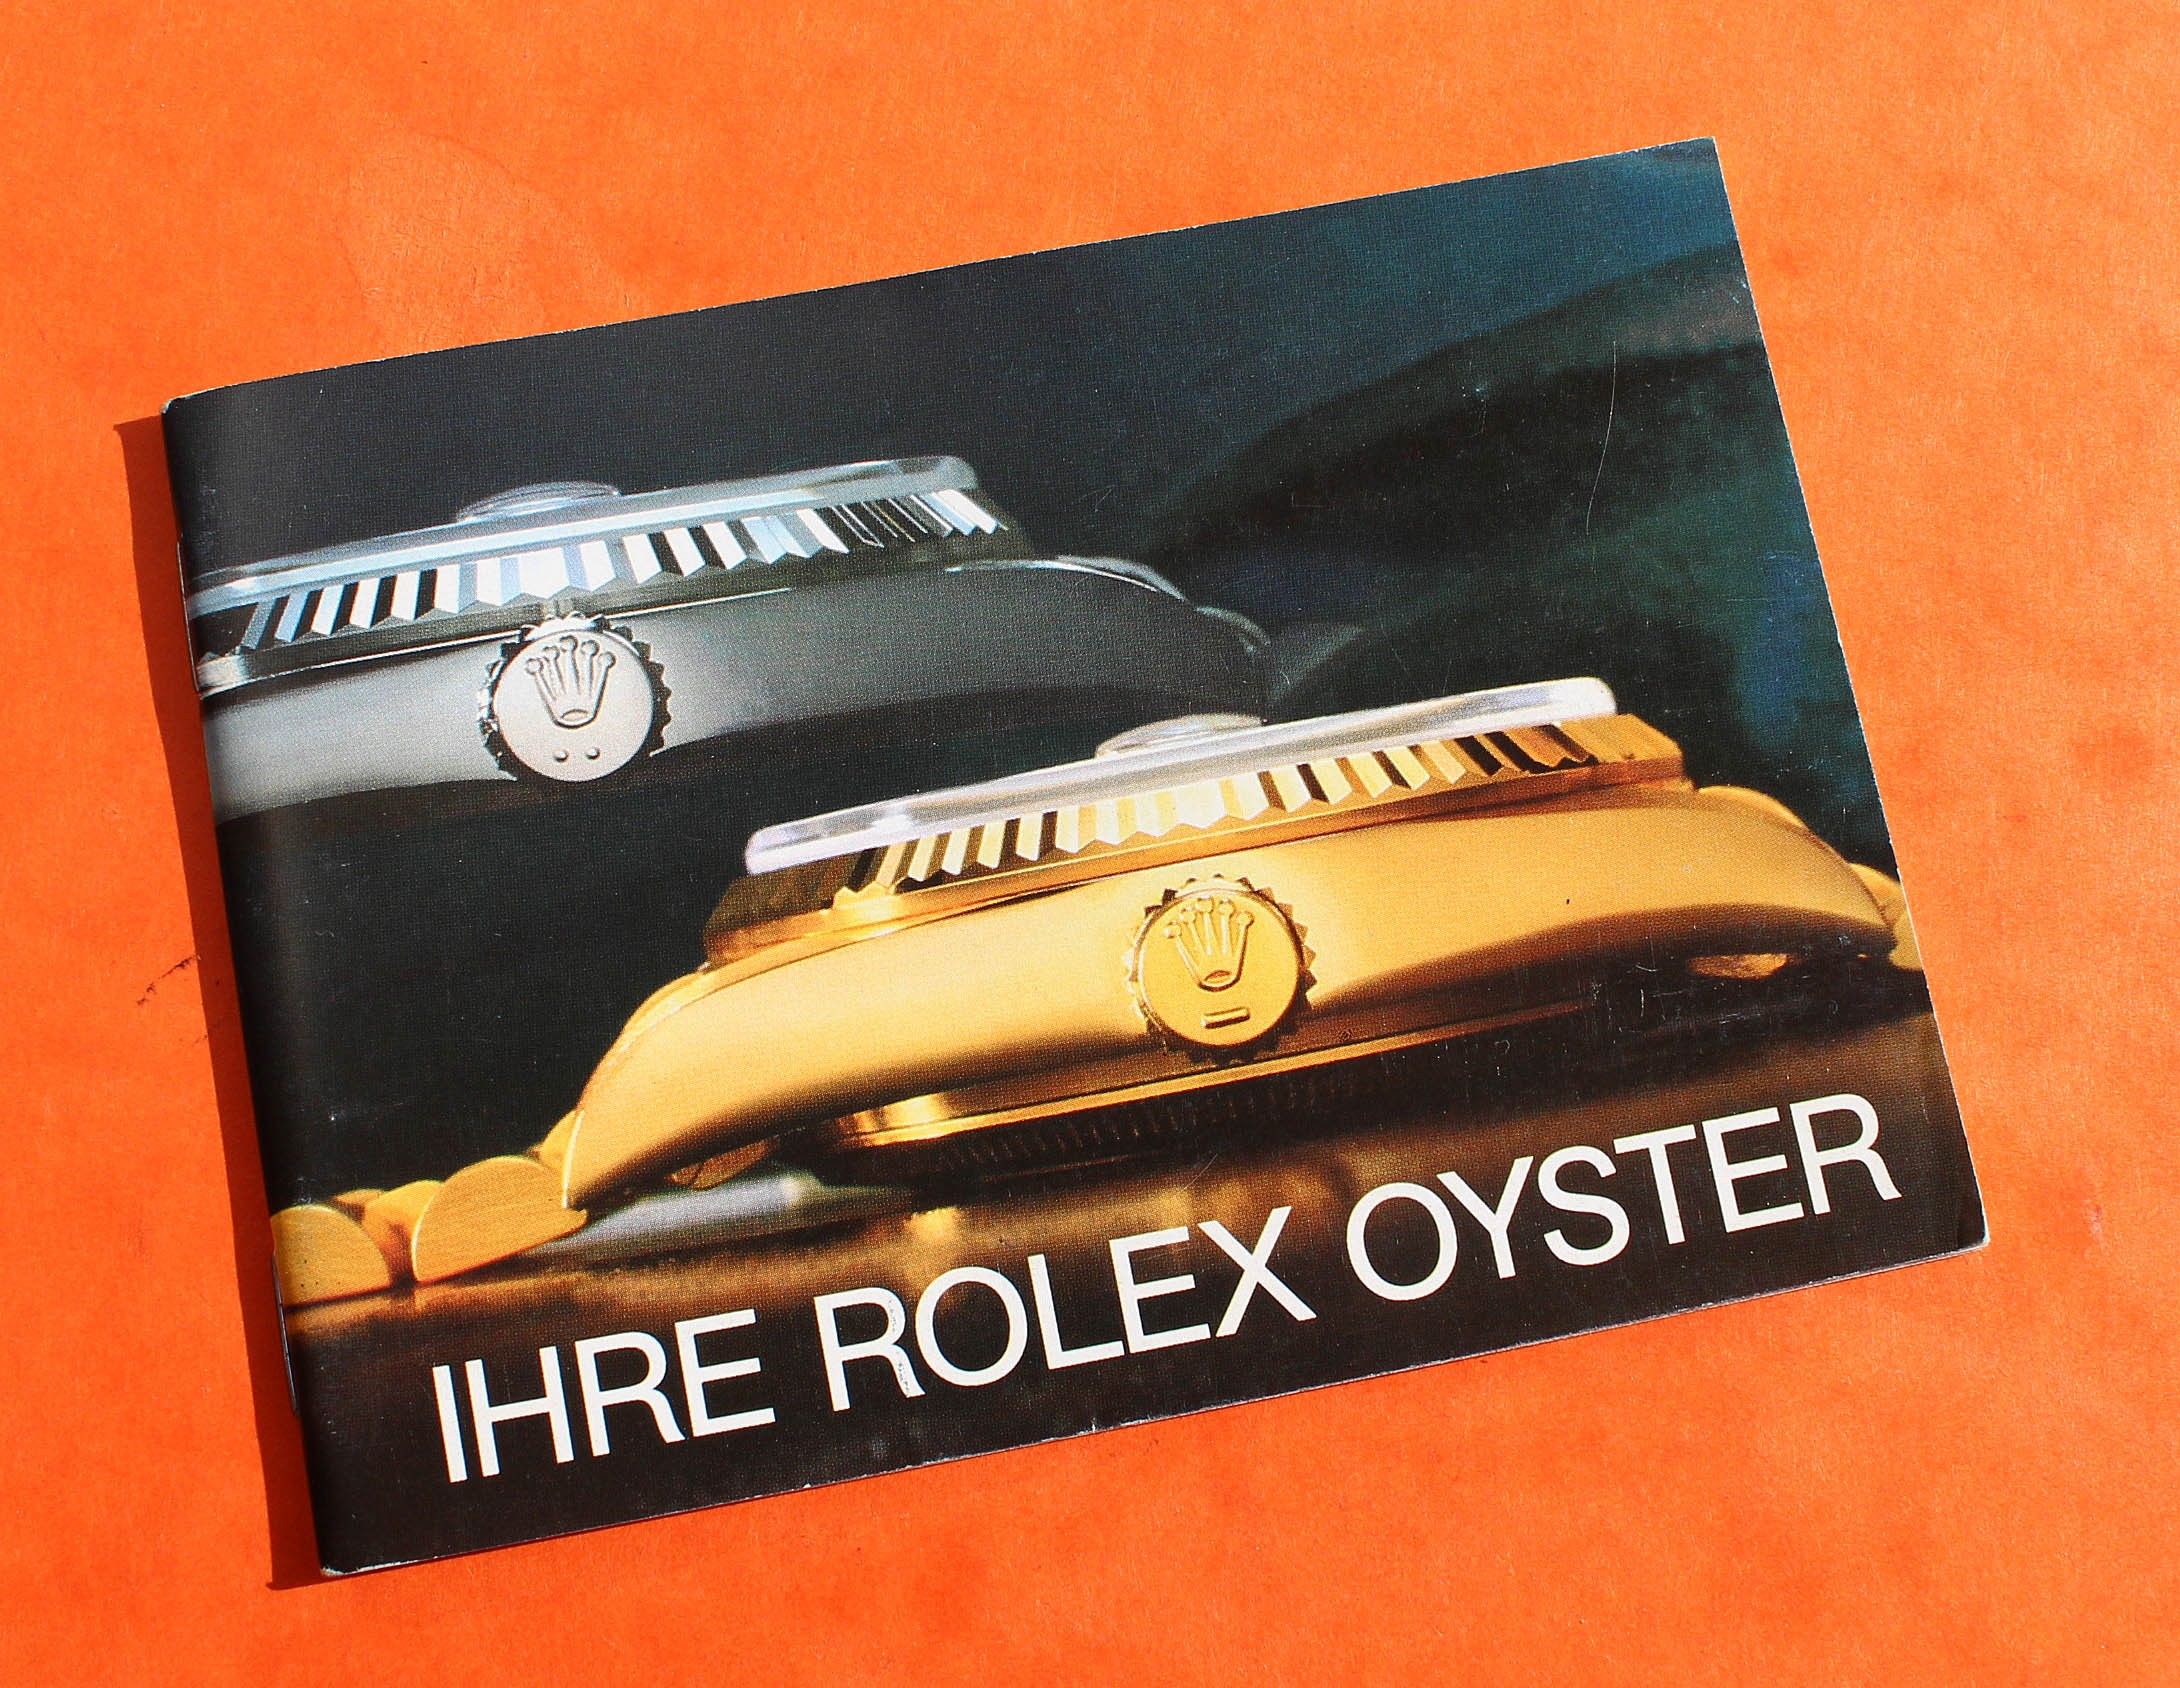 BOOKLET ROLEX "YOUR ROLEX OYSTER" 1988 SUBMARINER DAYDATE OYSTERQUARTZ DATEJUST GOLD